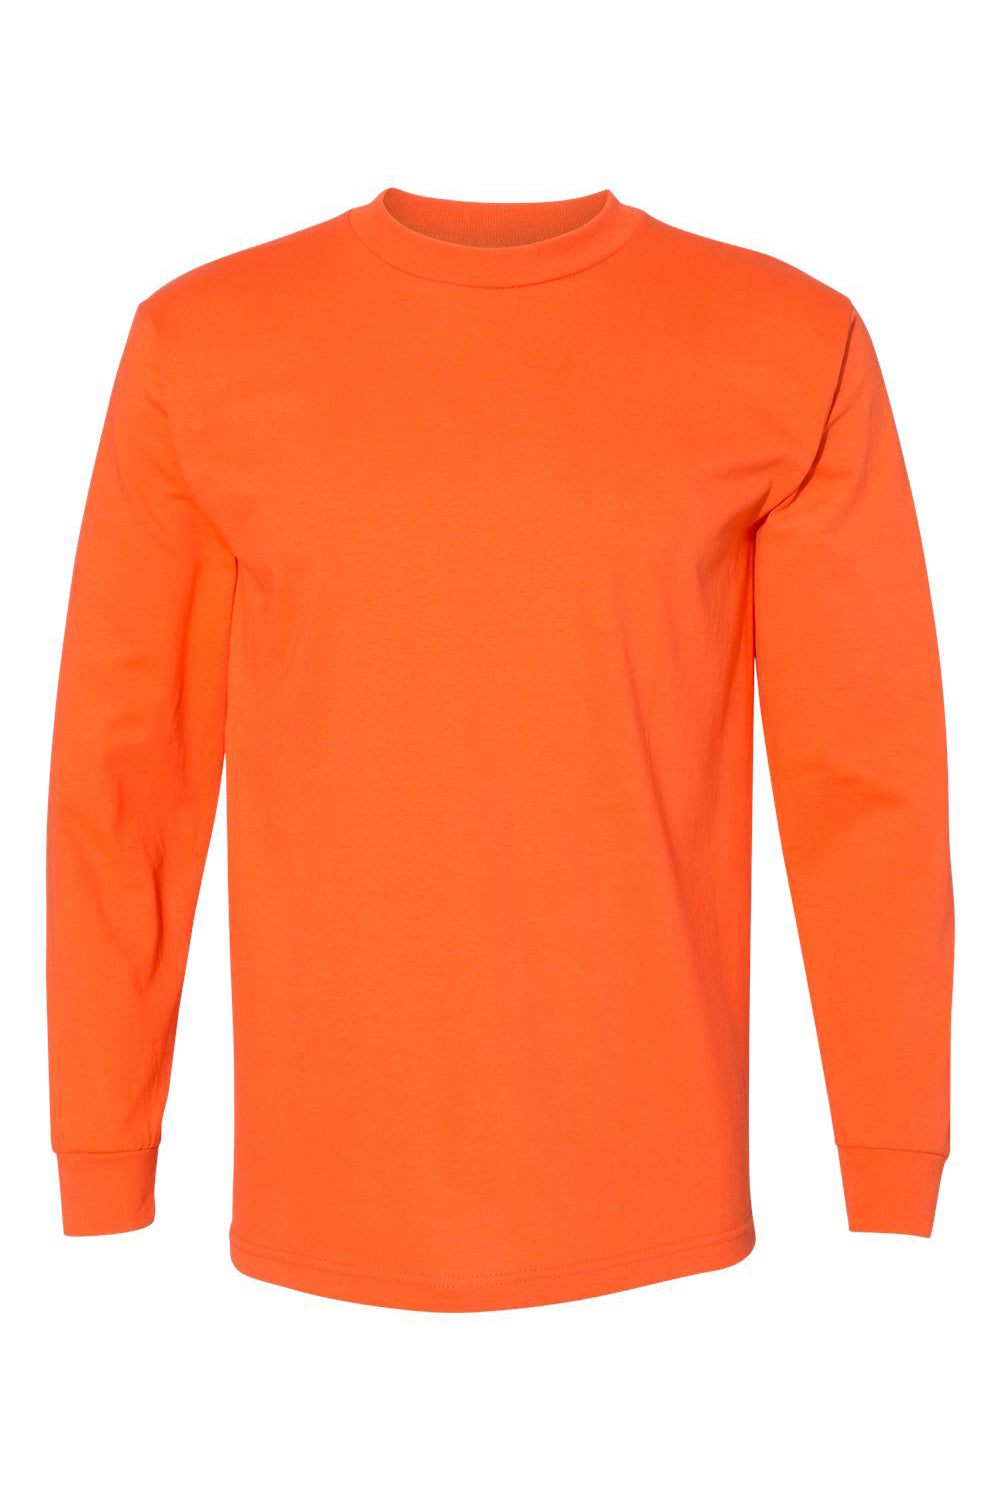 Bayside BA6100 Mens USA Made Long Sleeve Crewneck T-Shirt Bright Orange Flat Front